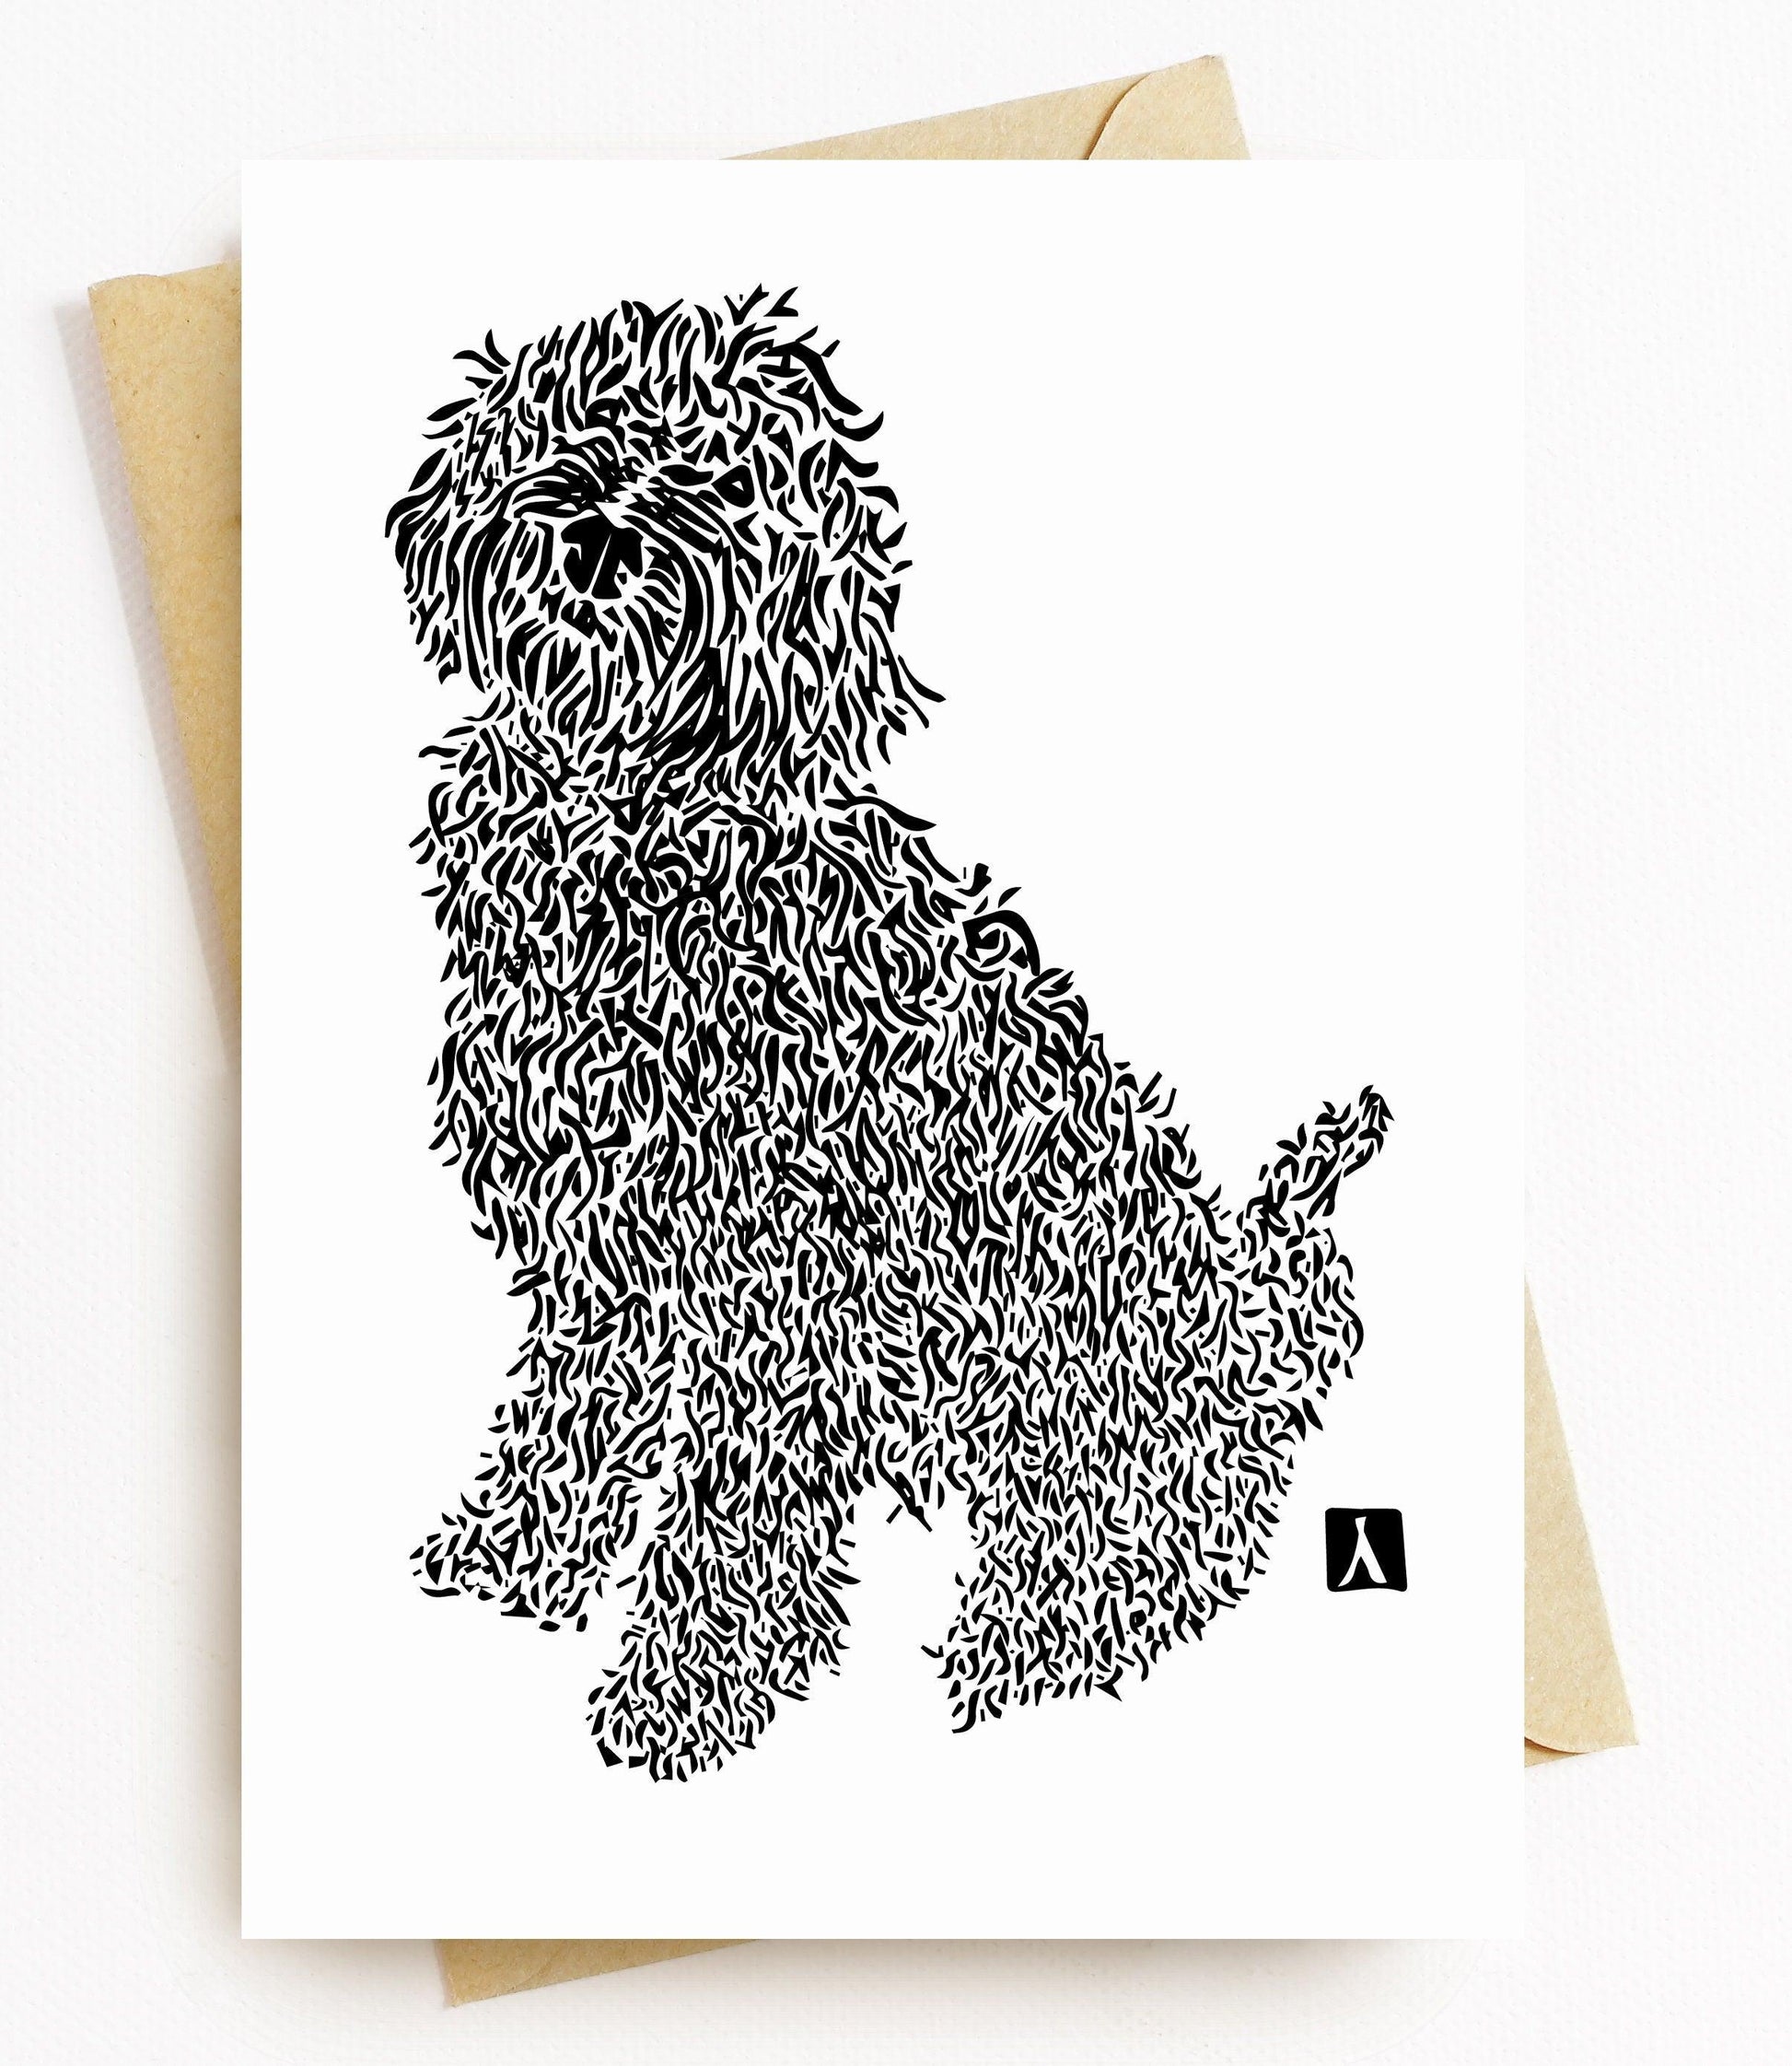 BellavanceInk: Greeting Card With A Sitting Labradoodle Dog 5 x 7 Inches - BellavanceInk